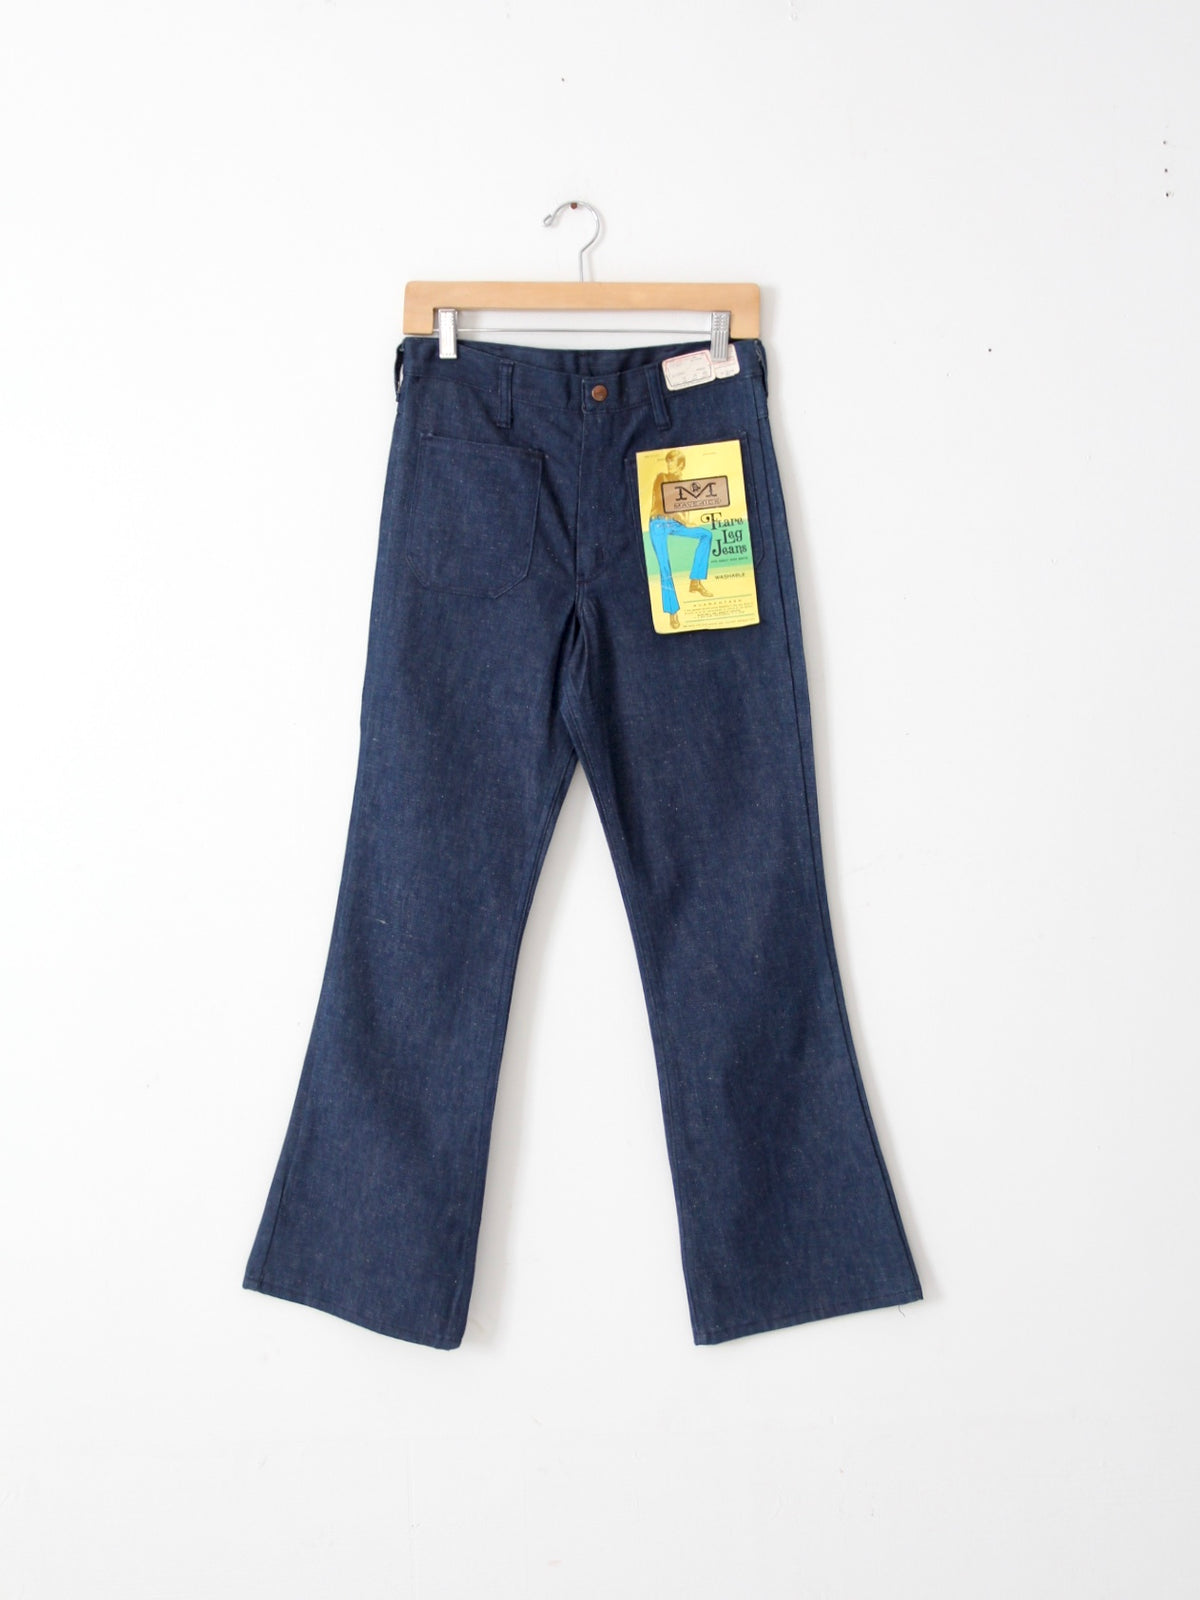 vintage nos 70s flare leg jeans